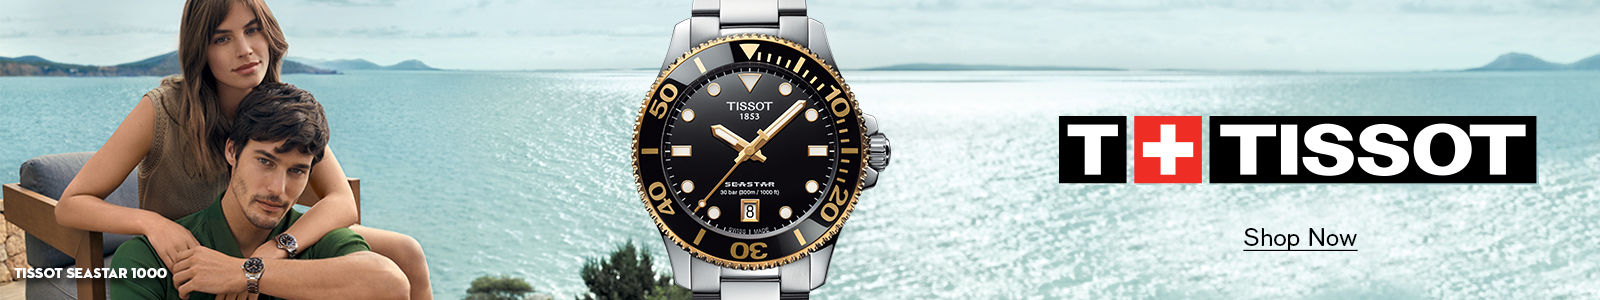 Tissot Seastar 1000, Shop Now